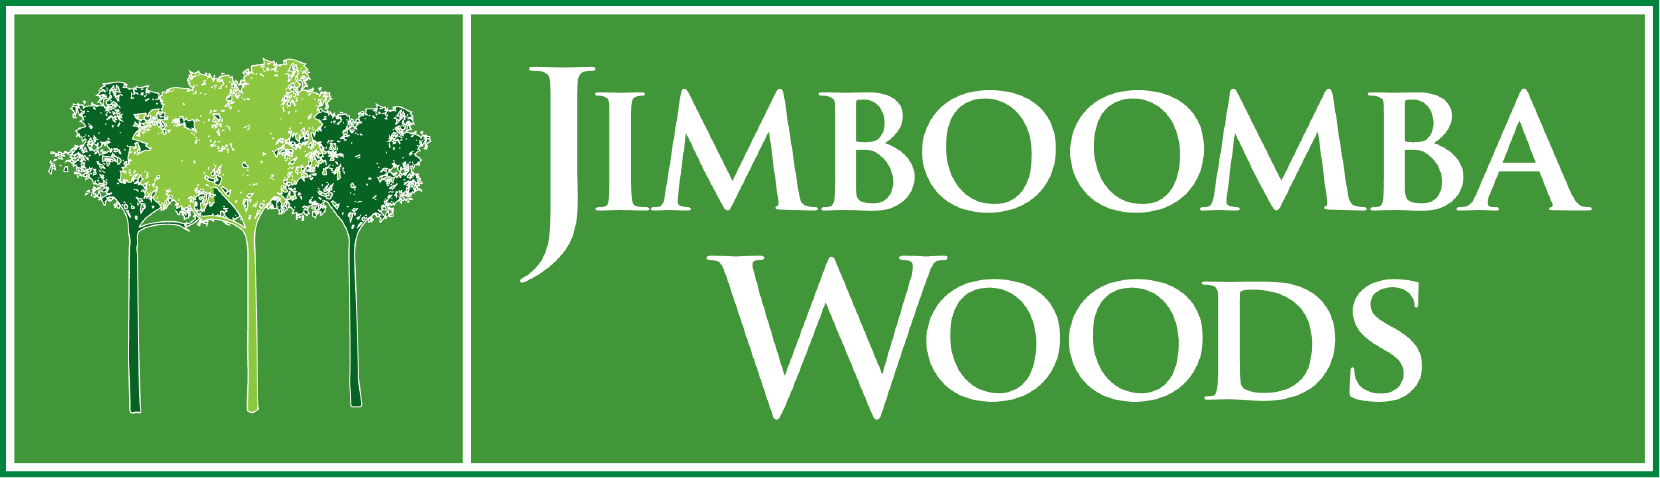 jimboomba woods logo